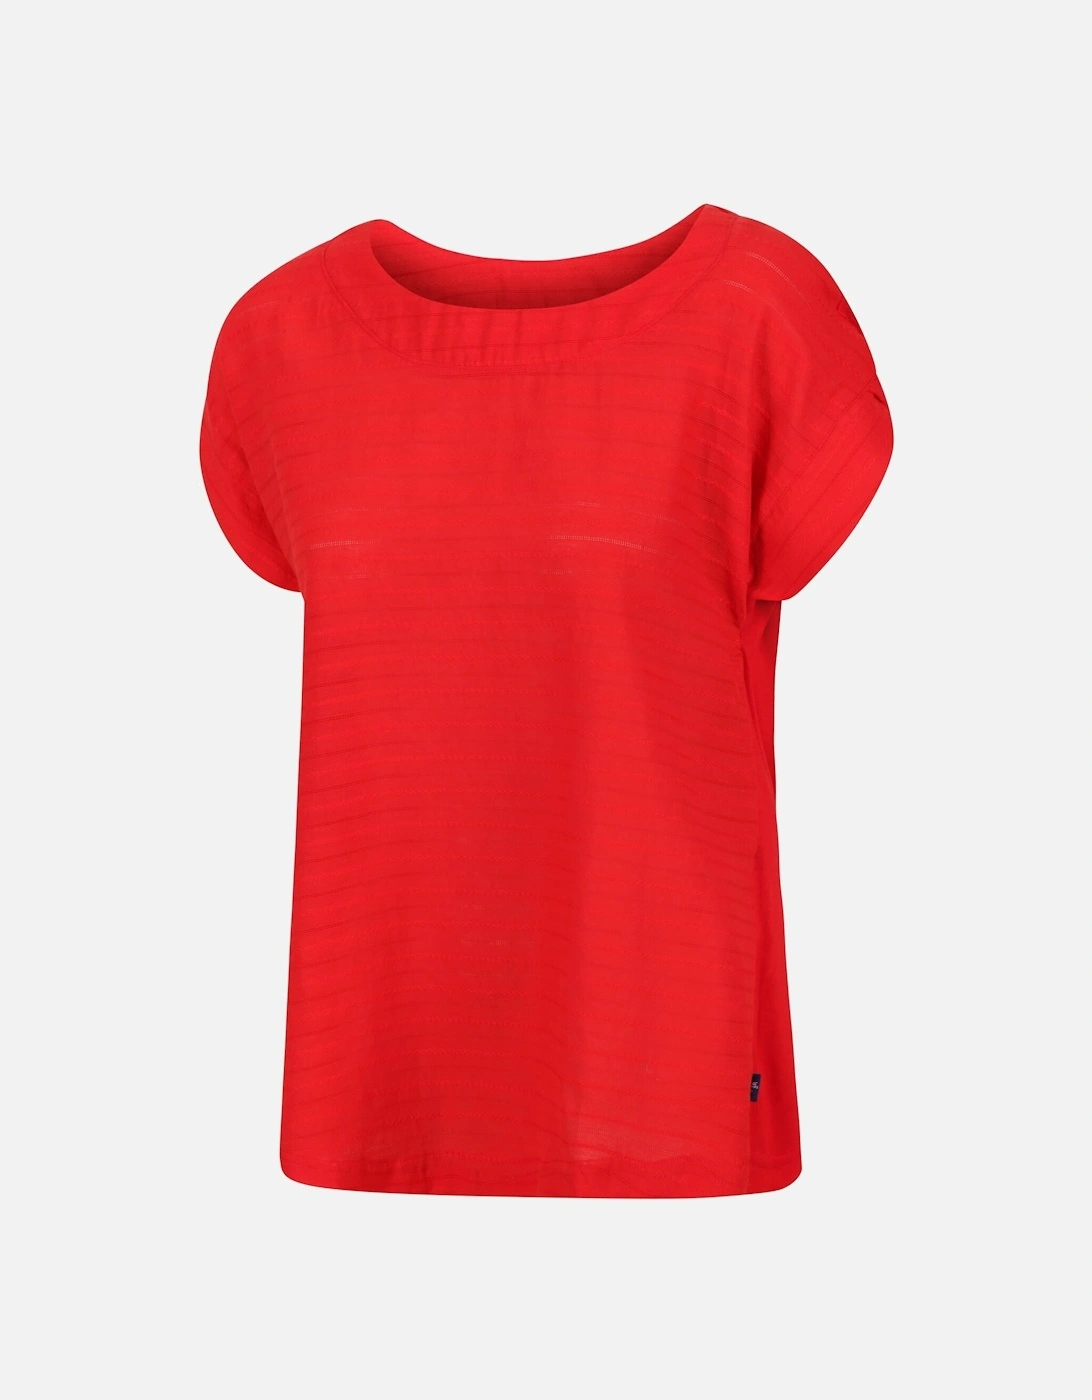 Womens/Ladies Adine Stripe T-Shirt